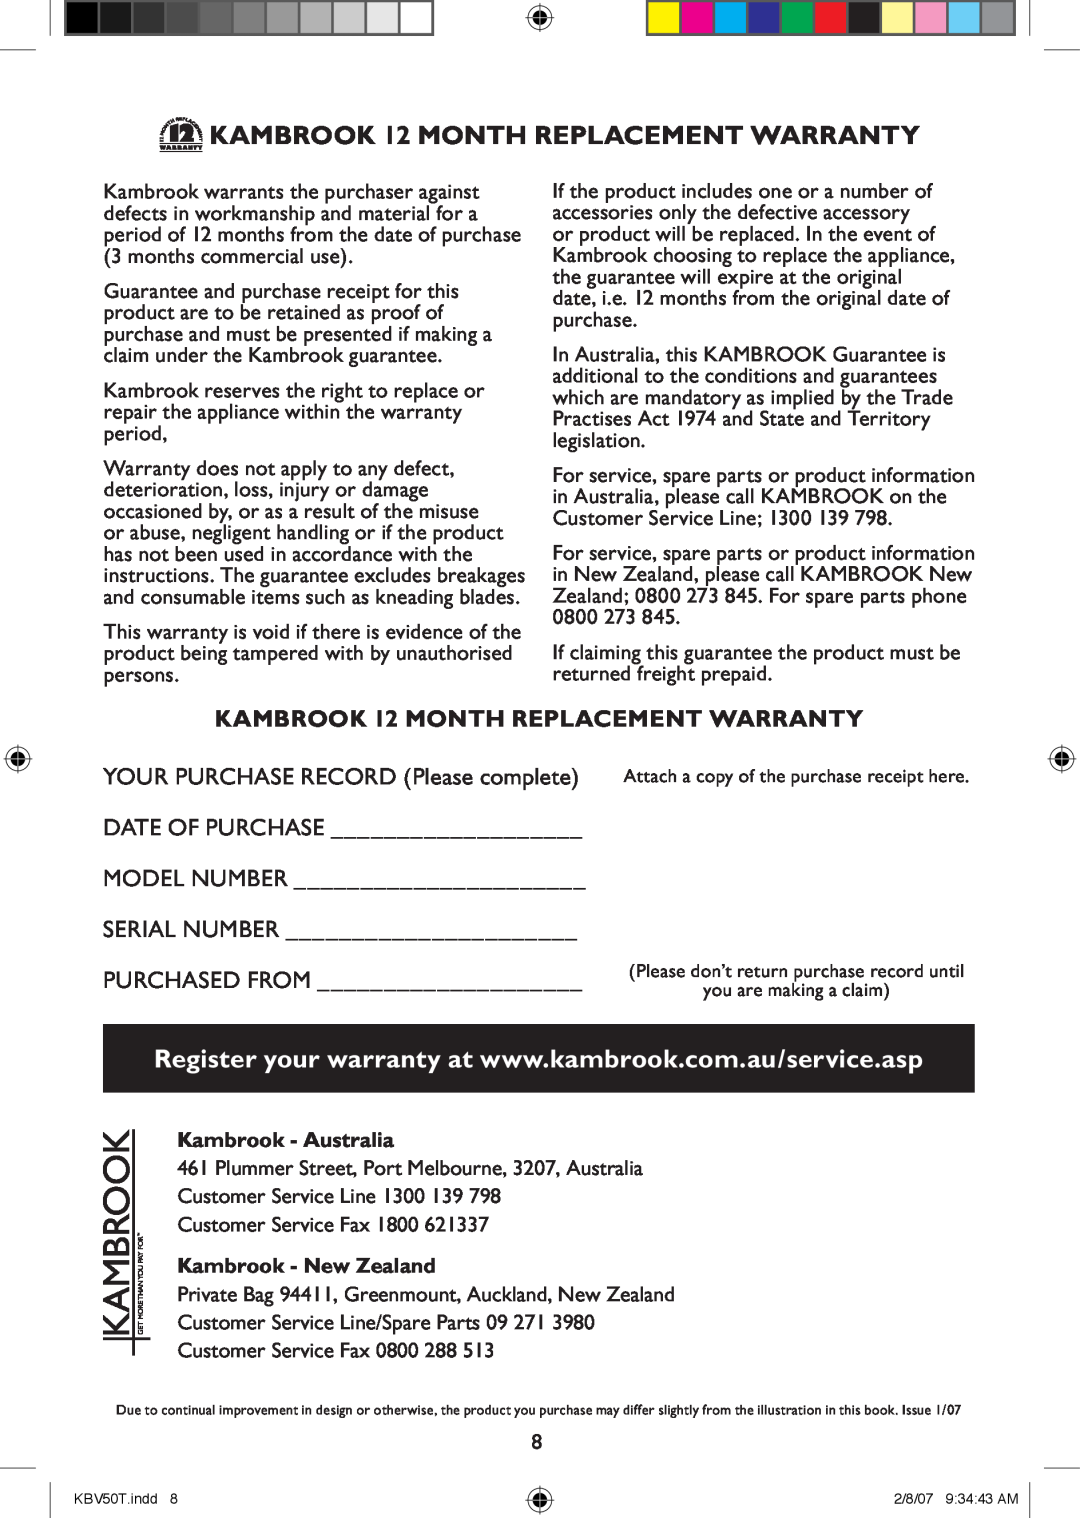 Kambrook KBV50T manual KAMBROOK 12 MONTH REPLACEMENT WARRANTY, Kambrook - Australia, Kambrook - New Zealand 